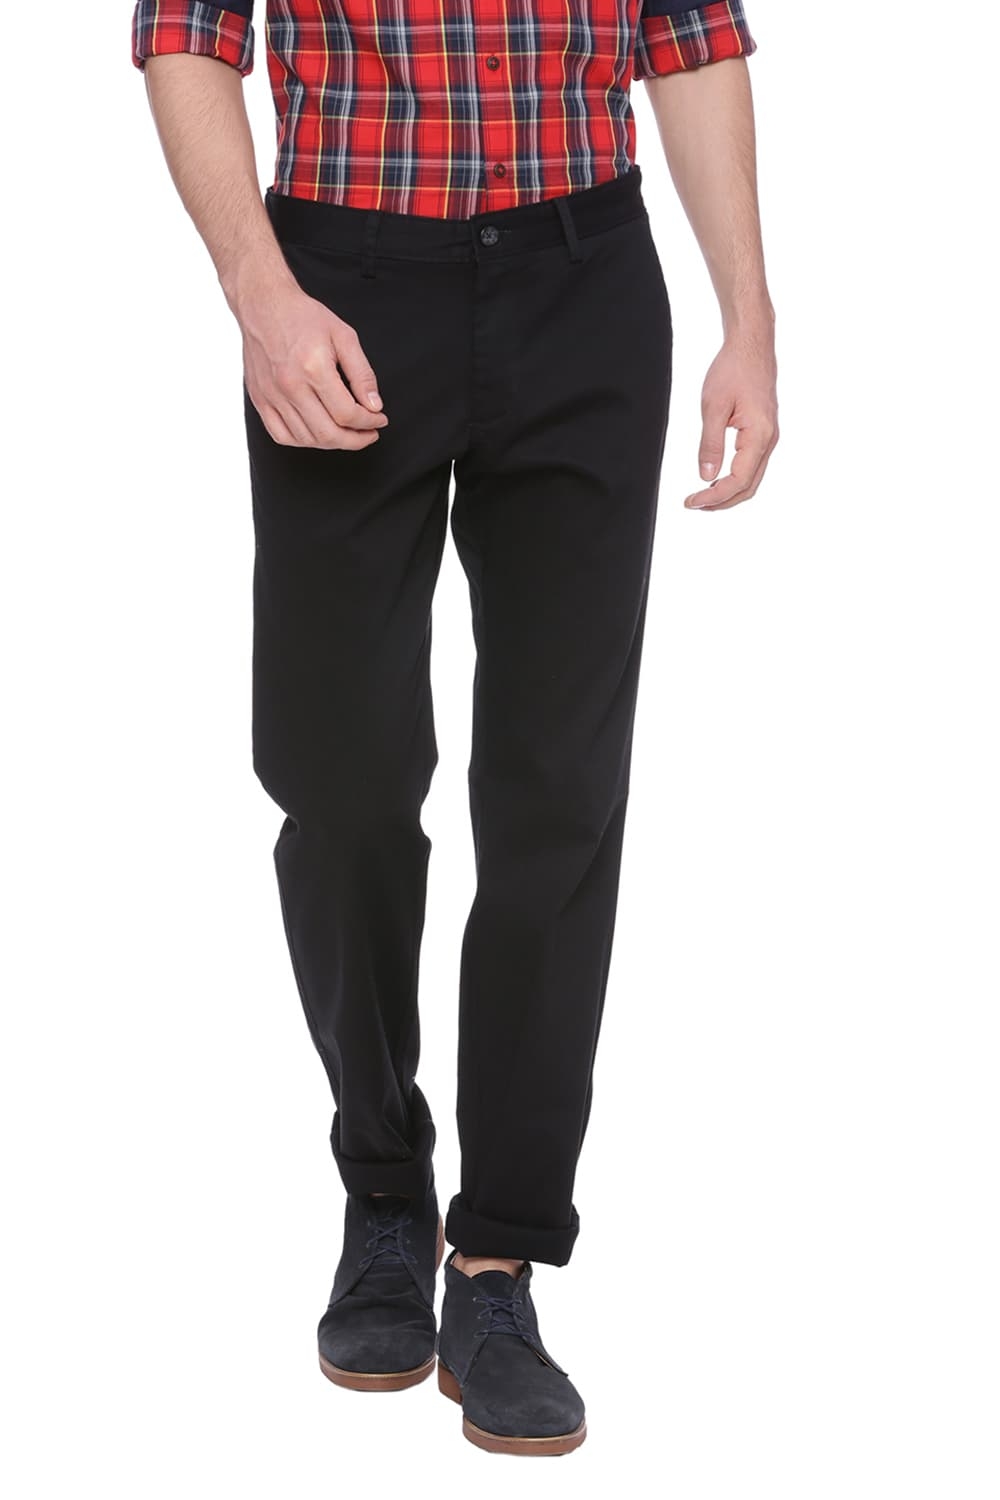 Basics | Basics Slim Fit Phantom Black Stretch Trouser